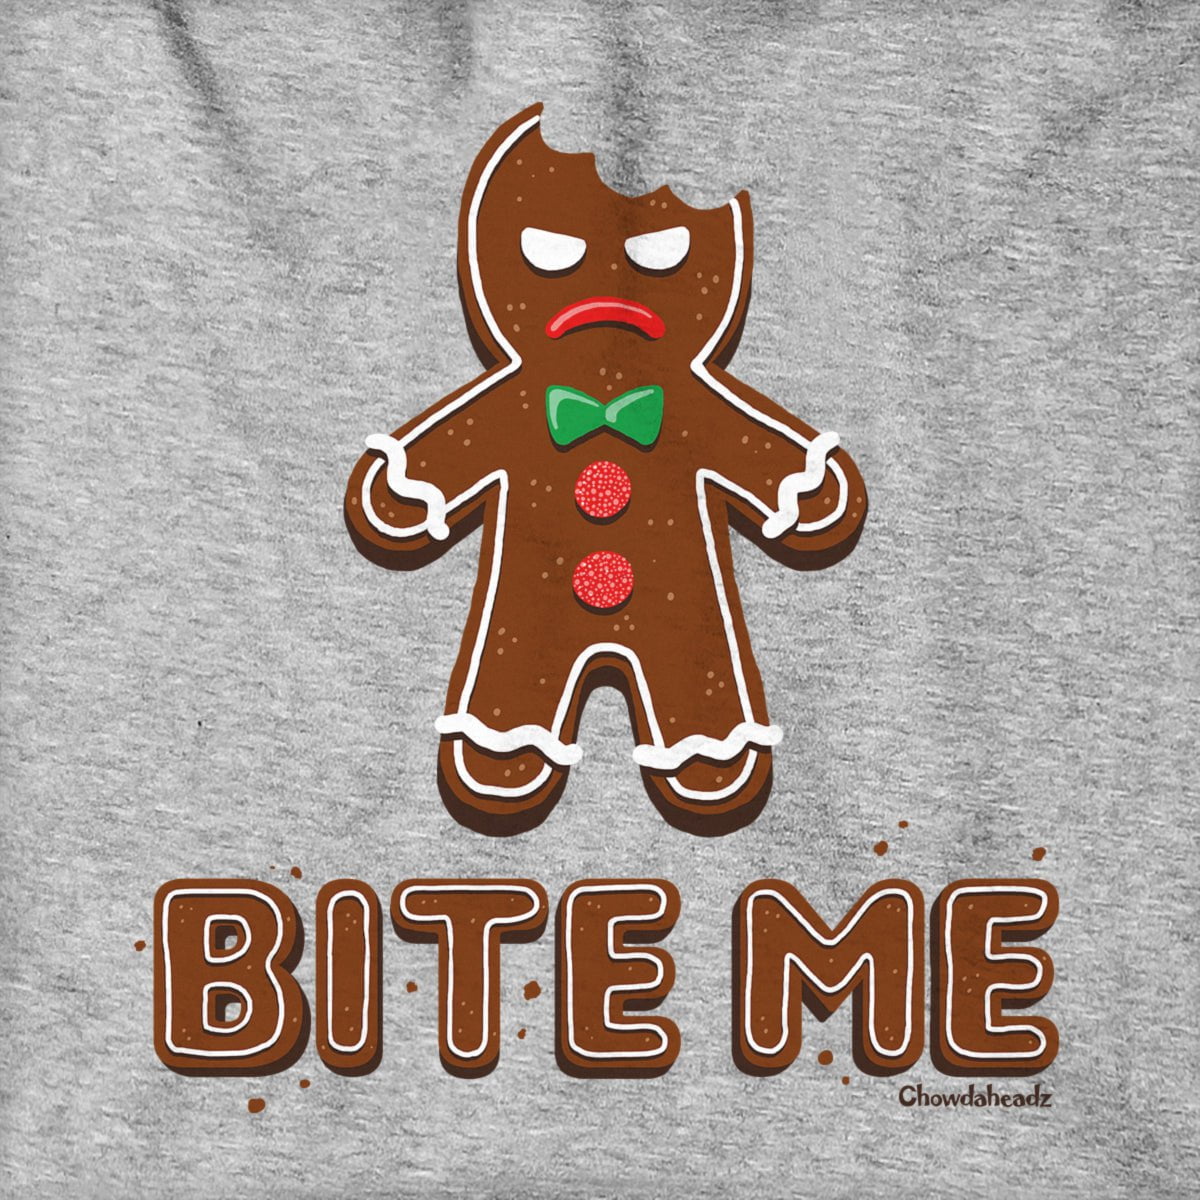 Bite Me Gingerbread Man Hoodie - Chowdaheadz